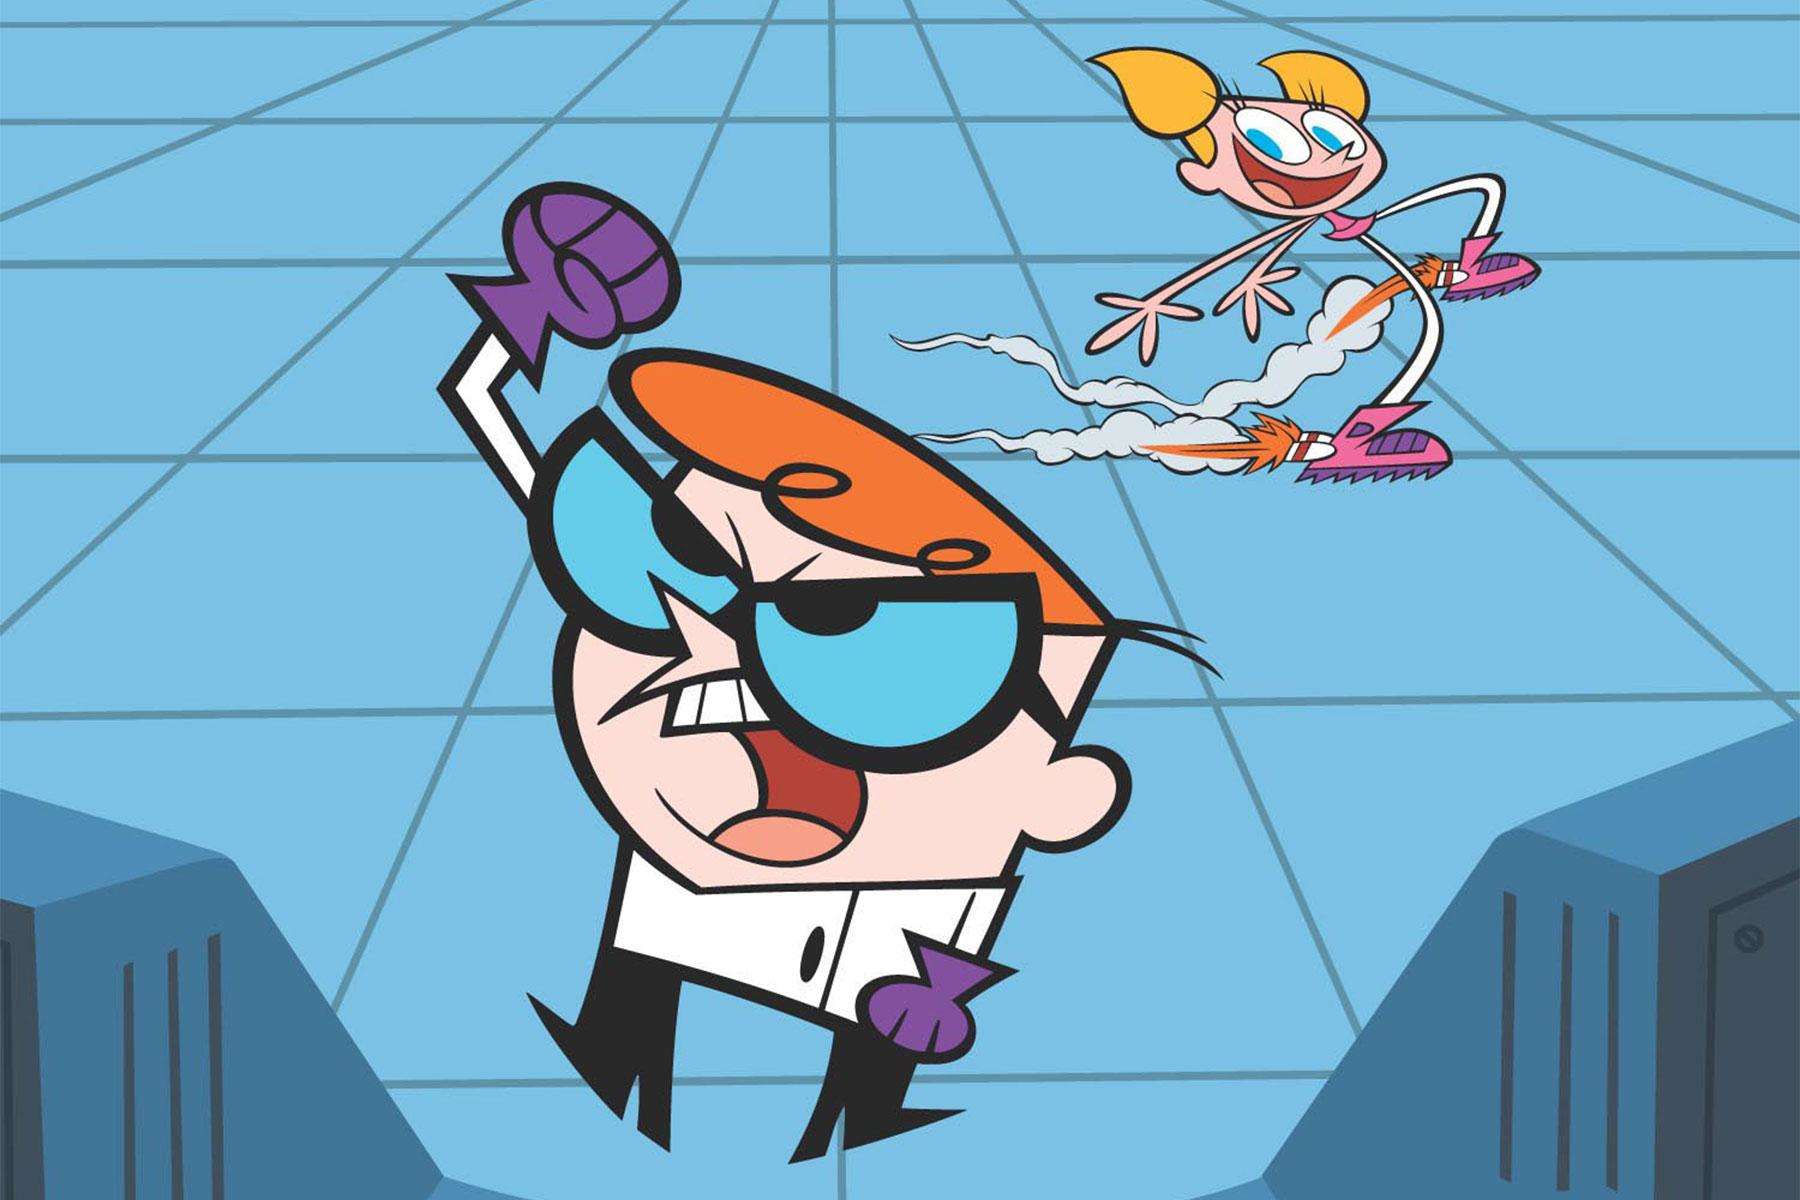 Dexter & Laboratory 2000's cartoons